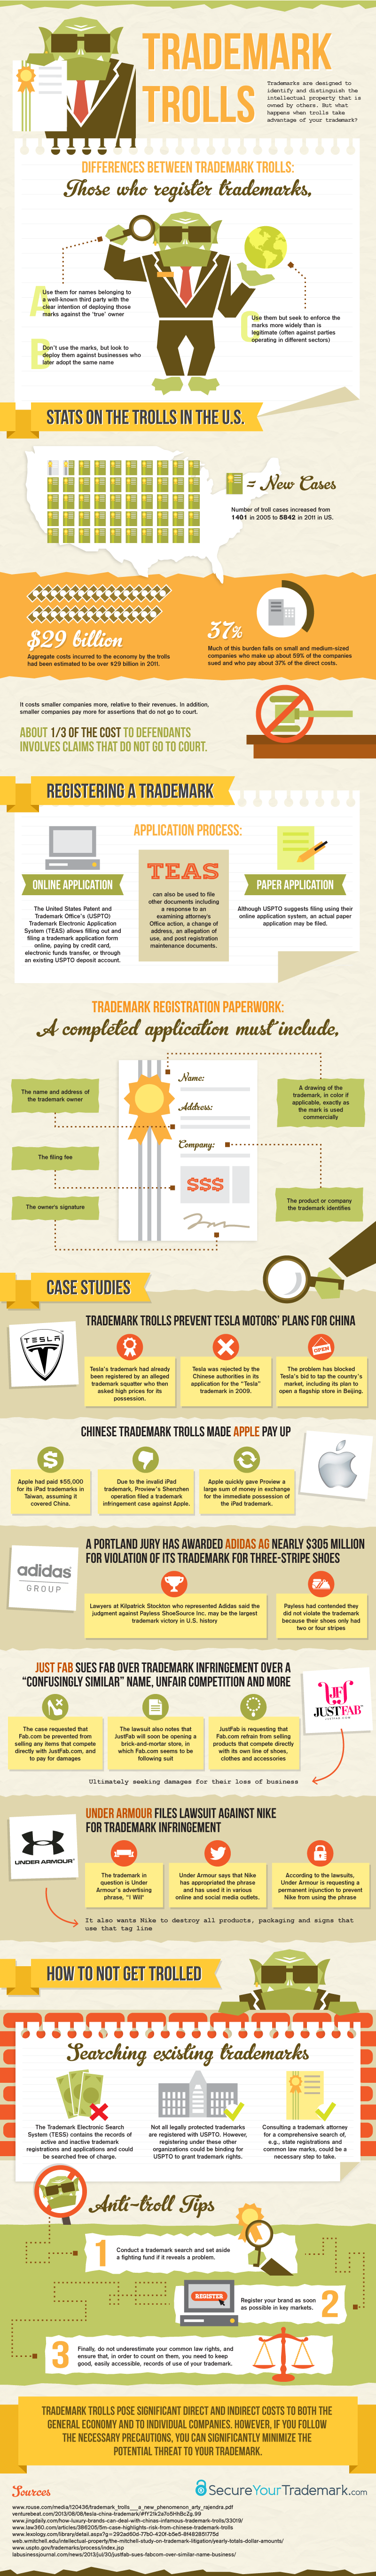 Trademark Trolls Infographic